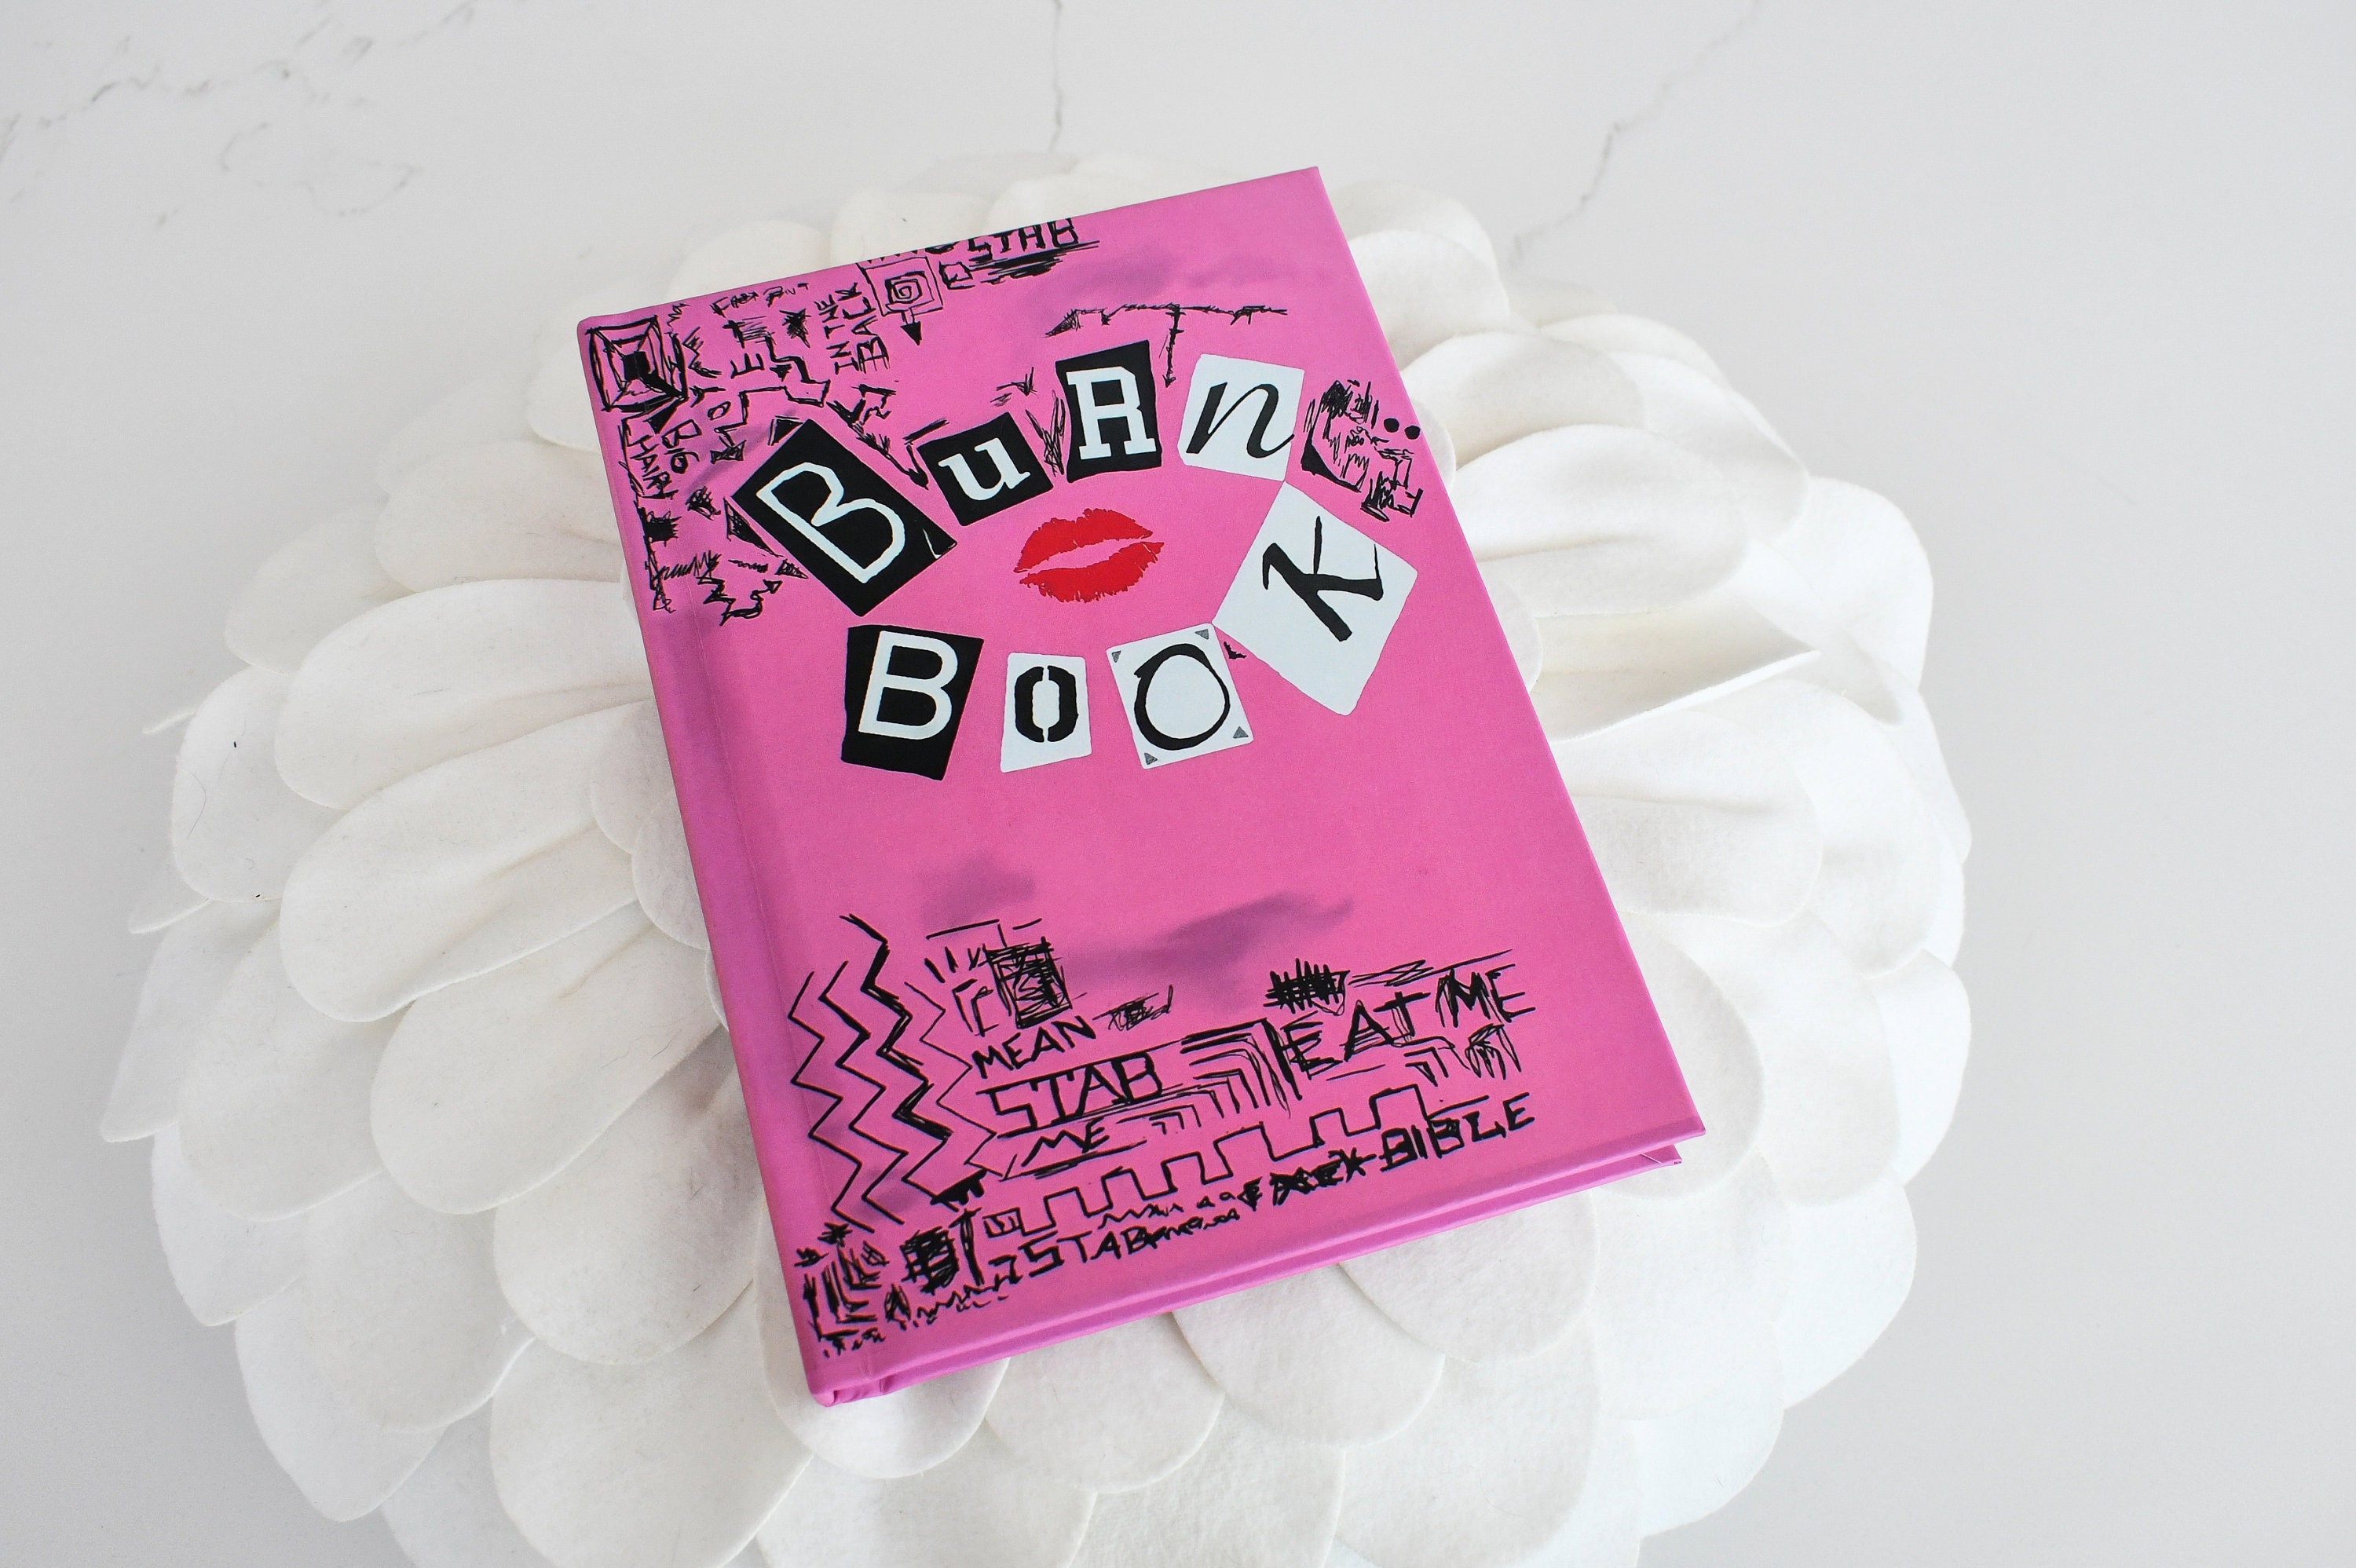 Mean Girls: The Burn Book Hardcover Ruled Journal (Hardcover)